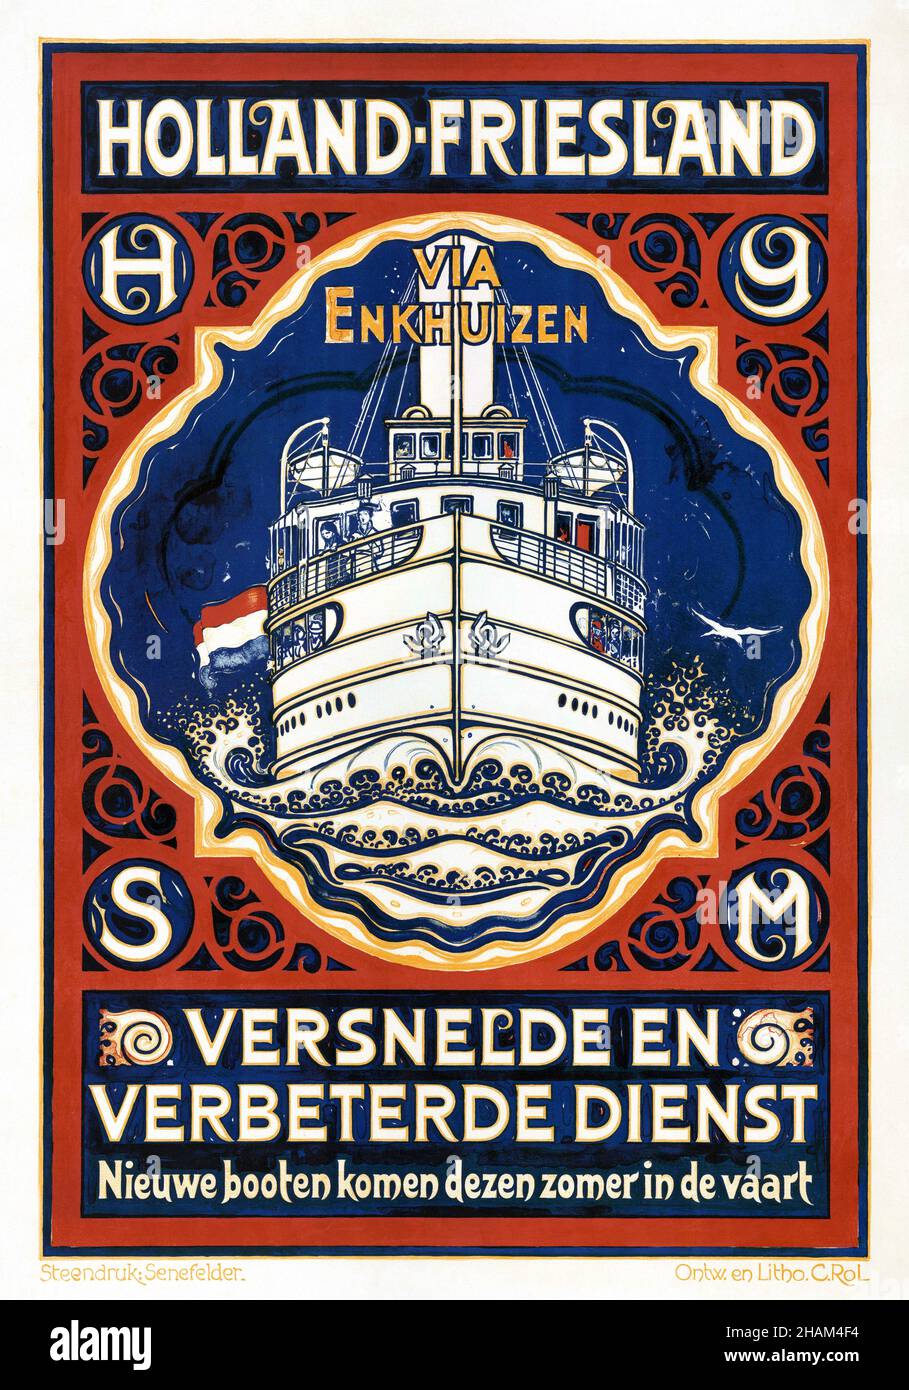 Holland Friesland. Versnelde en Verbeterde Dienst by Cornelis Rol (1877-1963). Poster published in 1915 in the Netherlands. Stock Photo